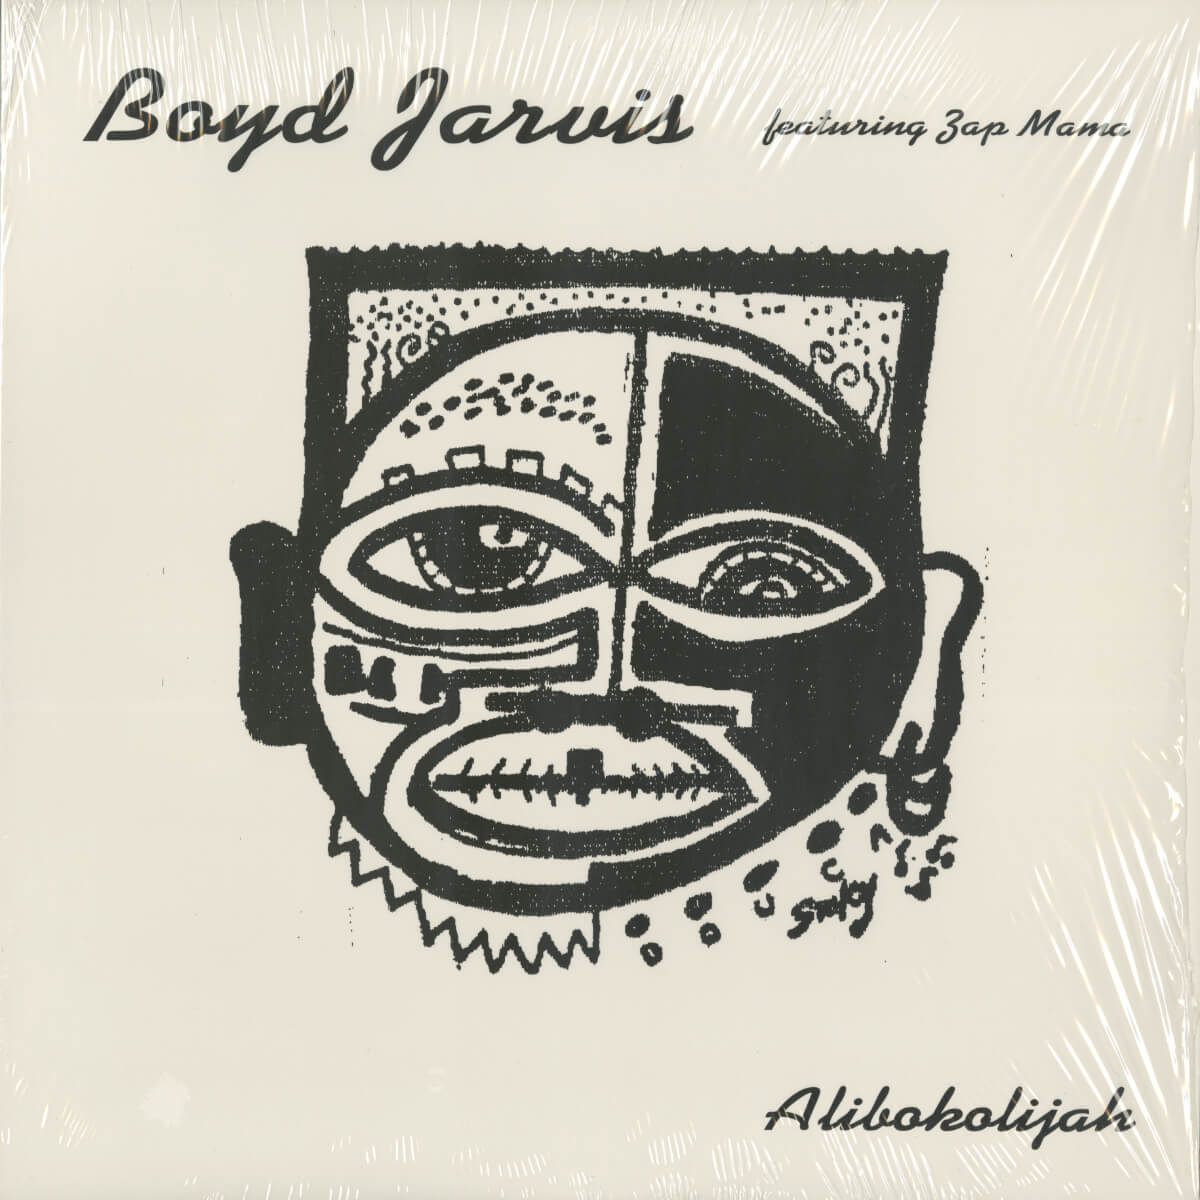 Boyd Jarvis – Alibokolijah